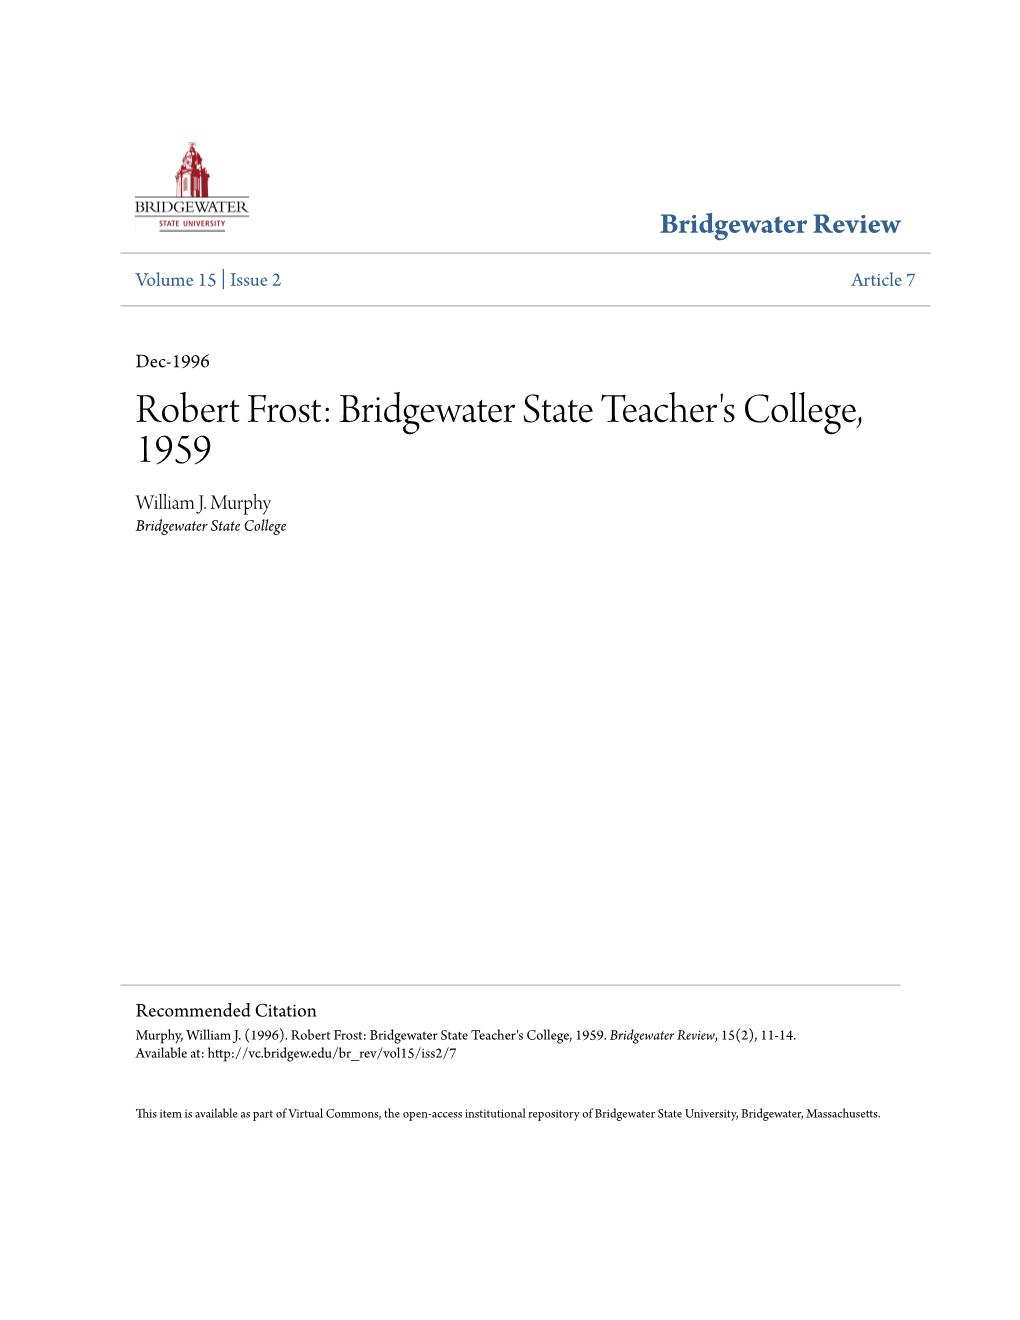 Robert Frost: Bridgewater State Teacher's College, 1959 William J